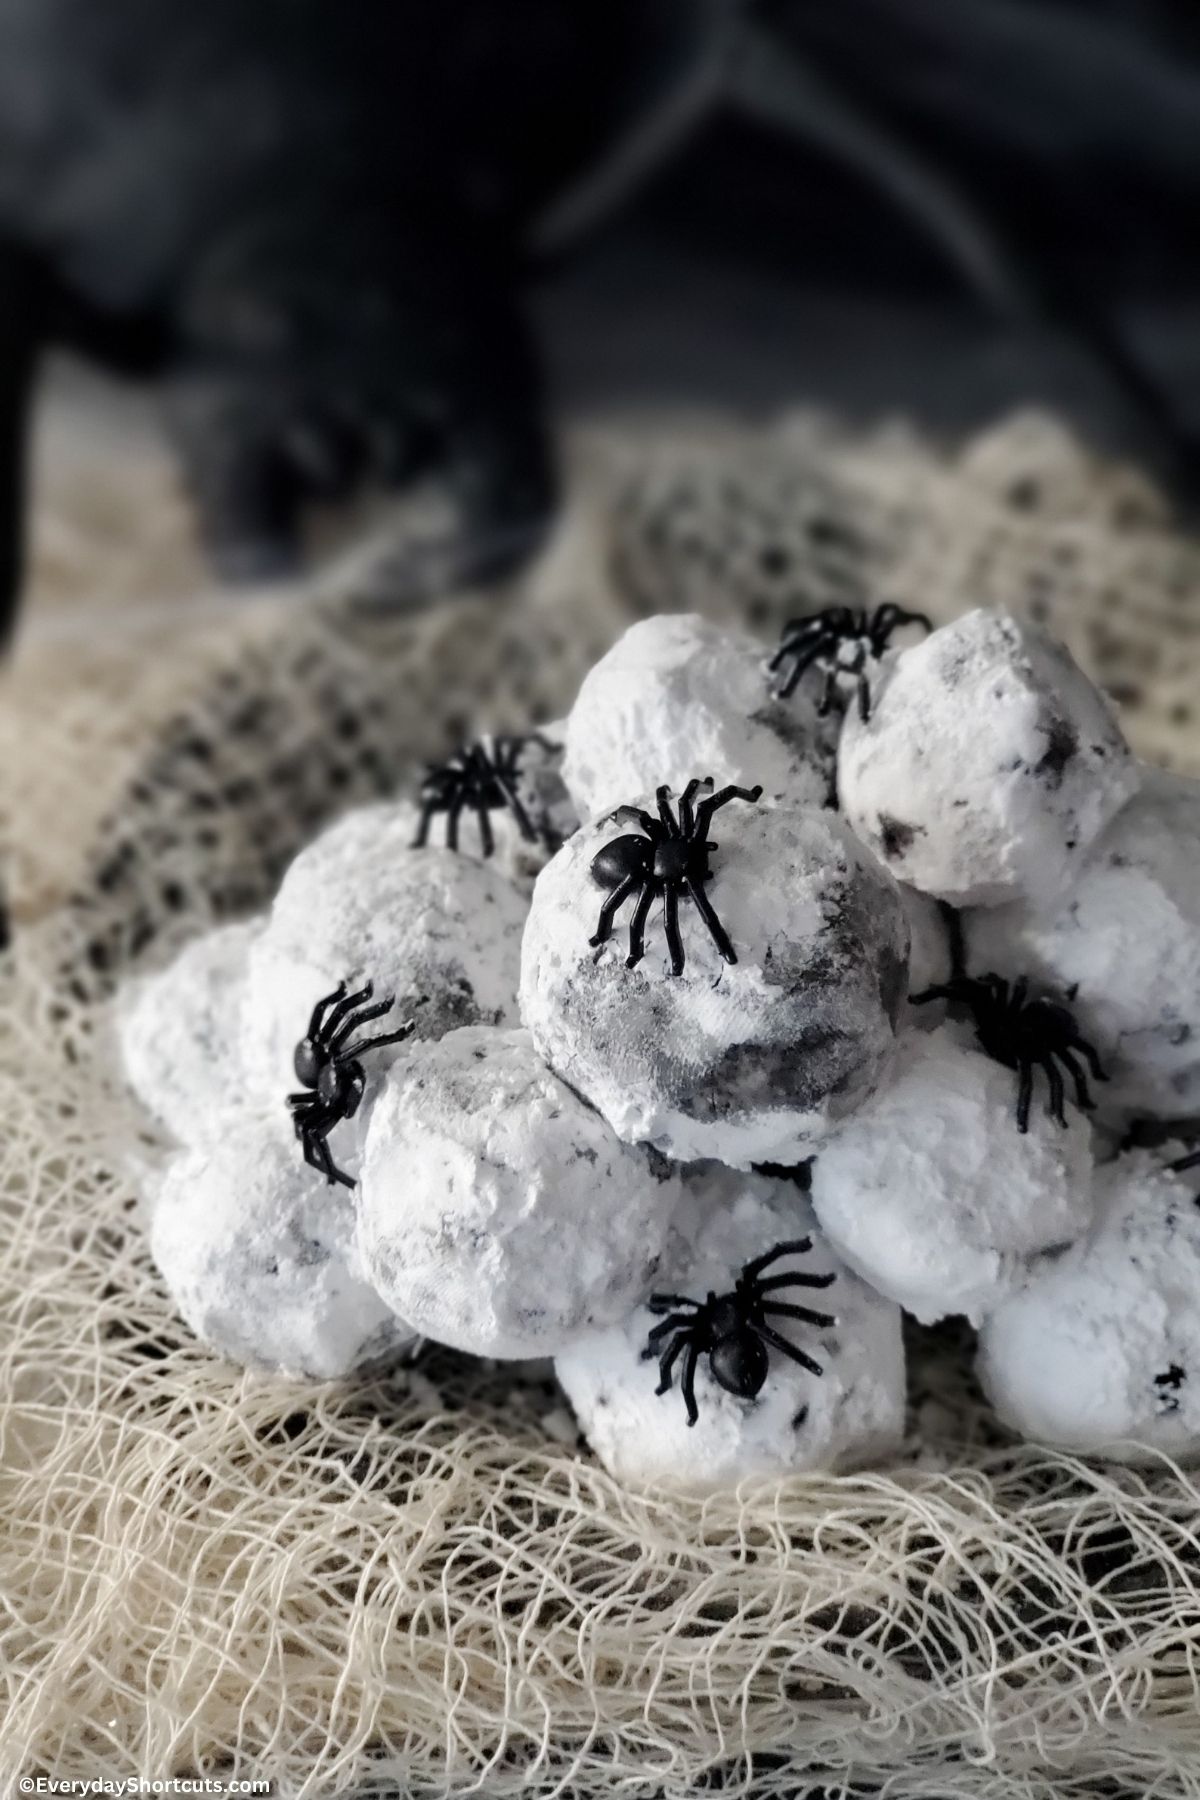 Oreo balls Halloween treats with mini plastic spiders